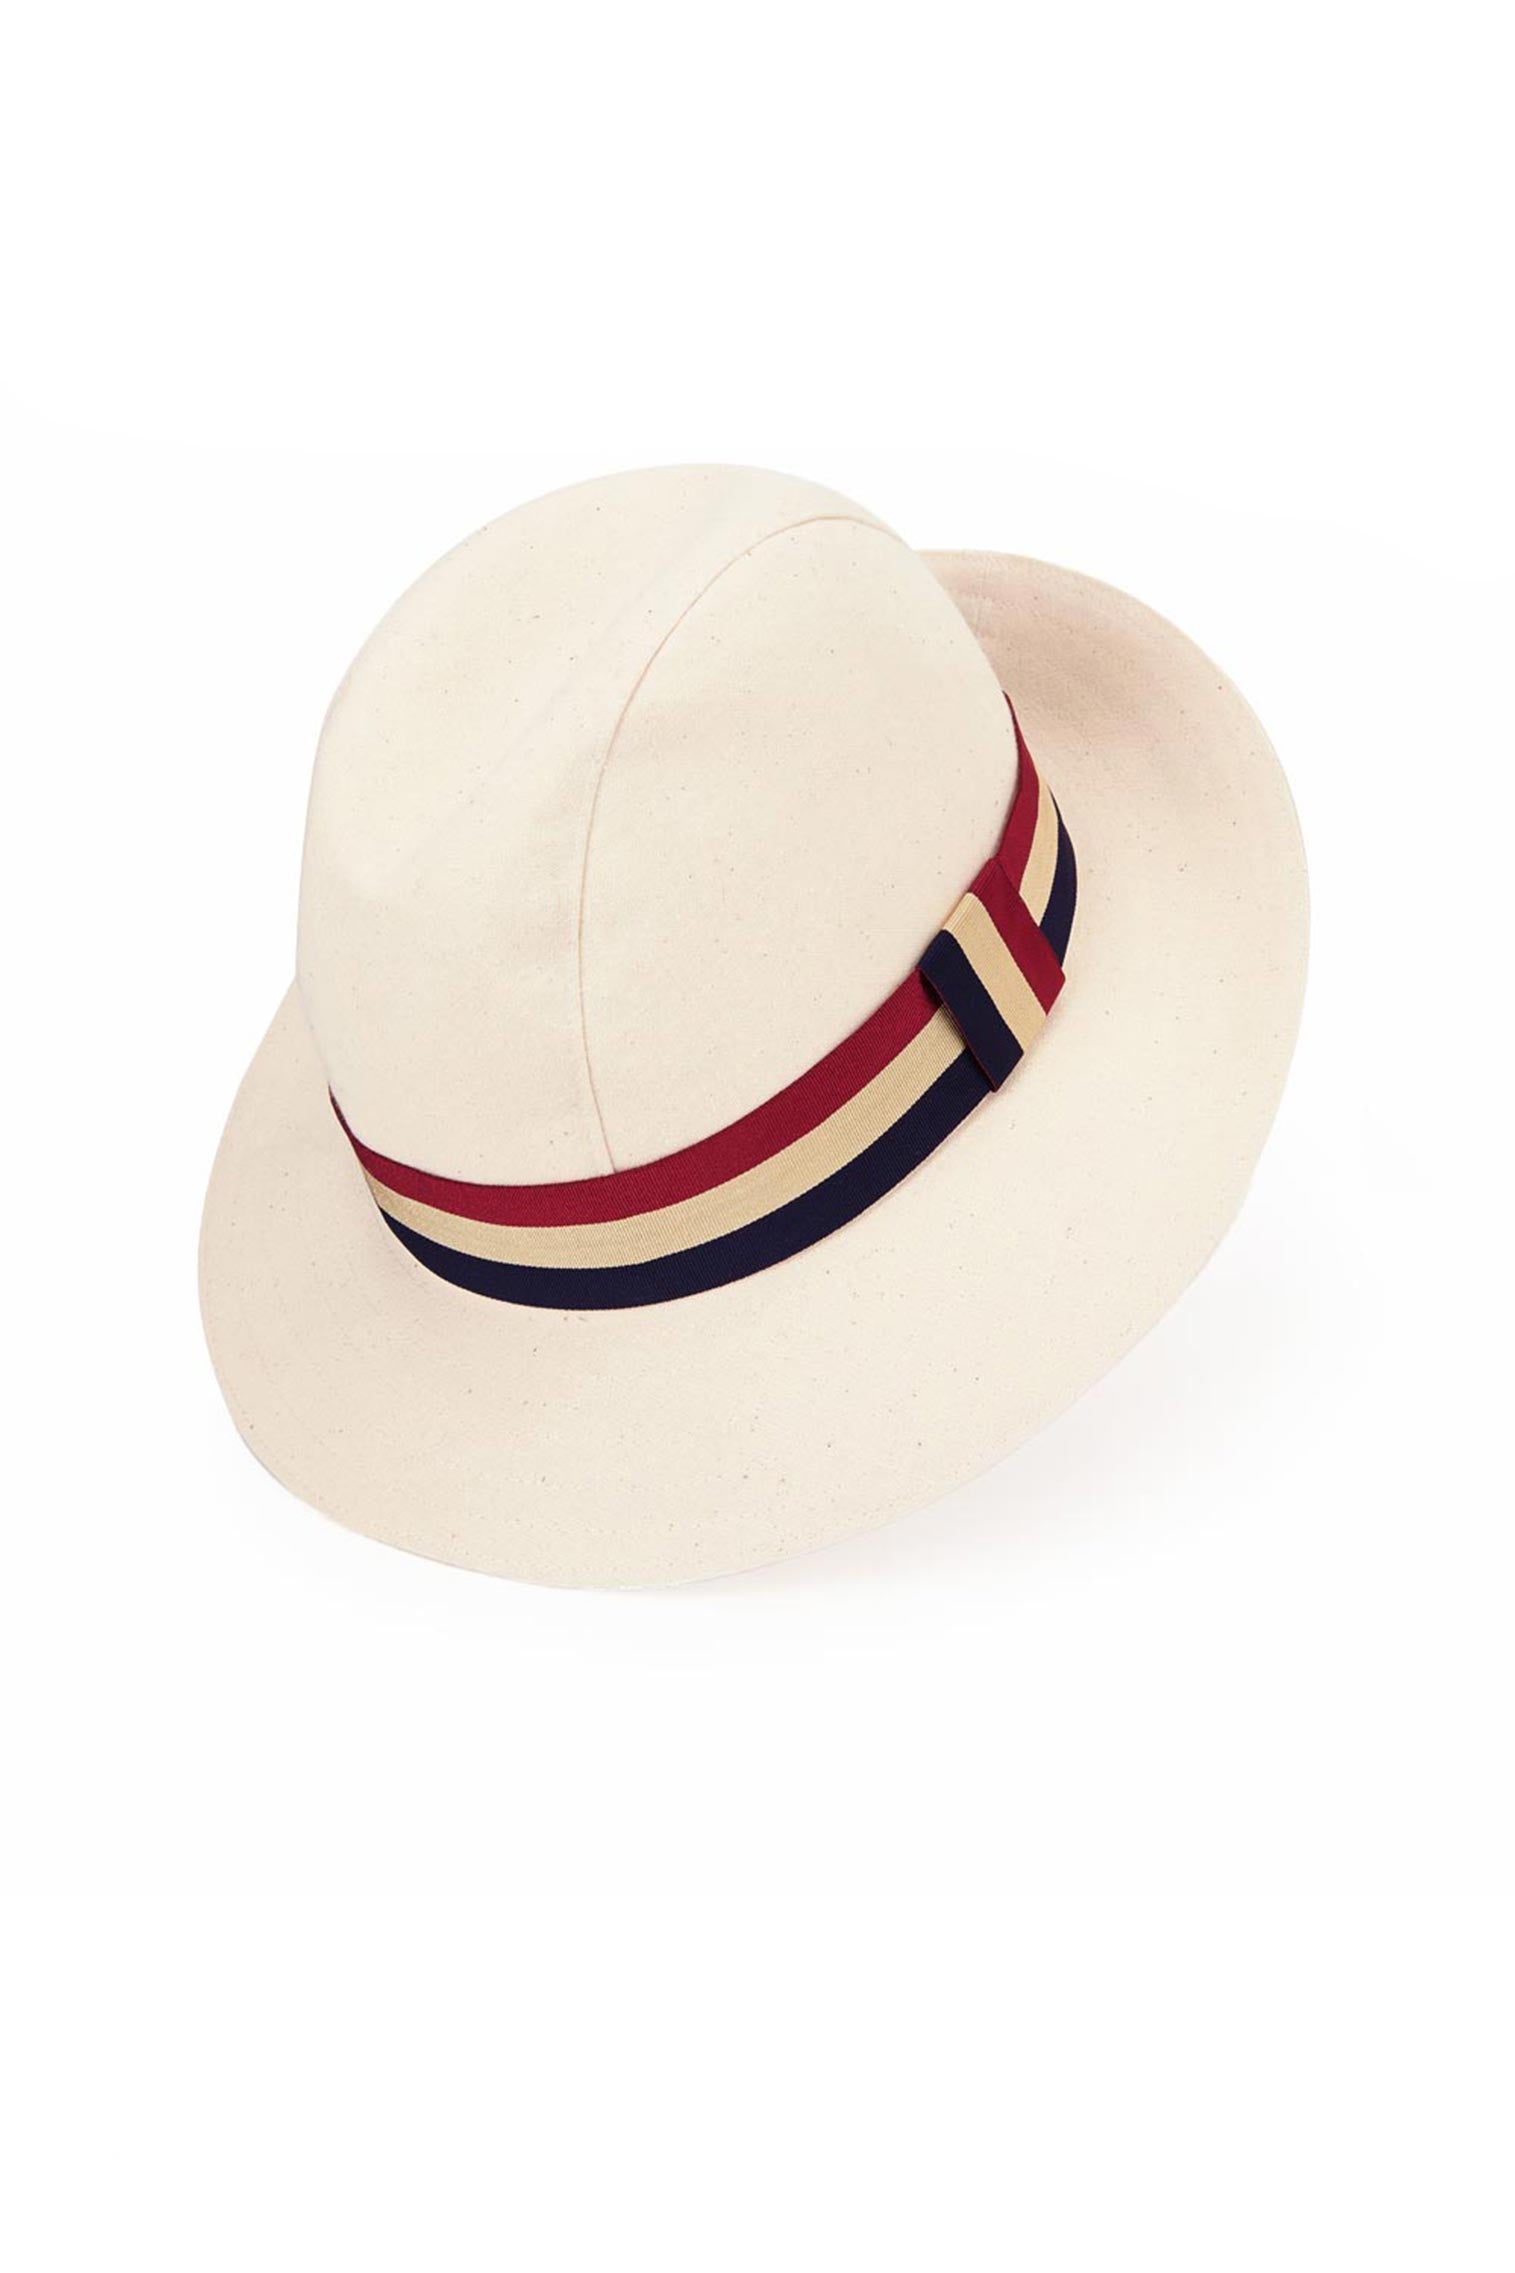 Monaco Hat - Panamas and Sun Hats for Men - Lock & Co. Hatters London UK